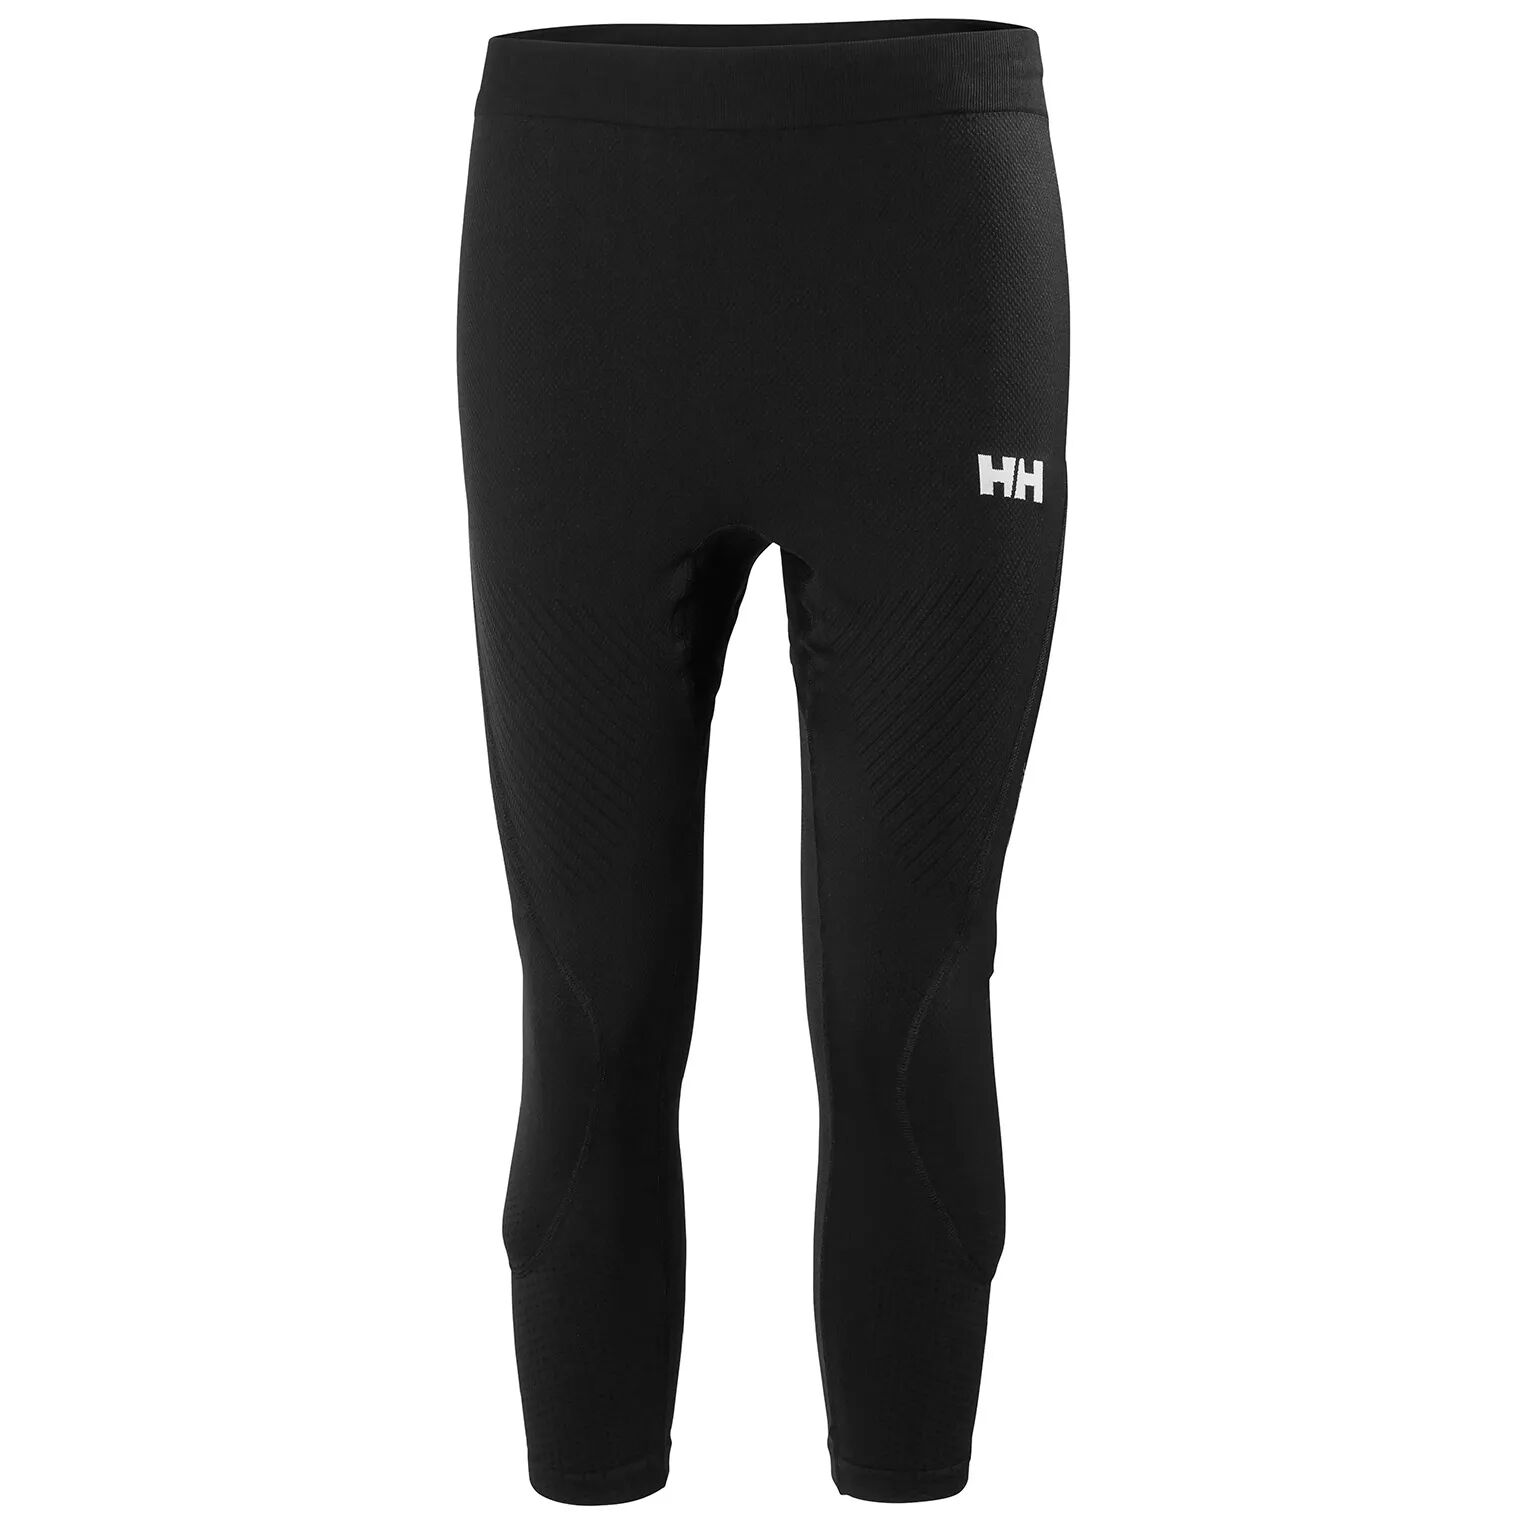 Helly Hansen Men's H1 Pro Protective Ski Pants Black L